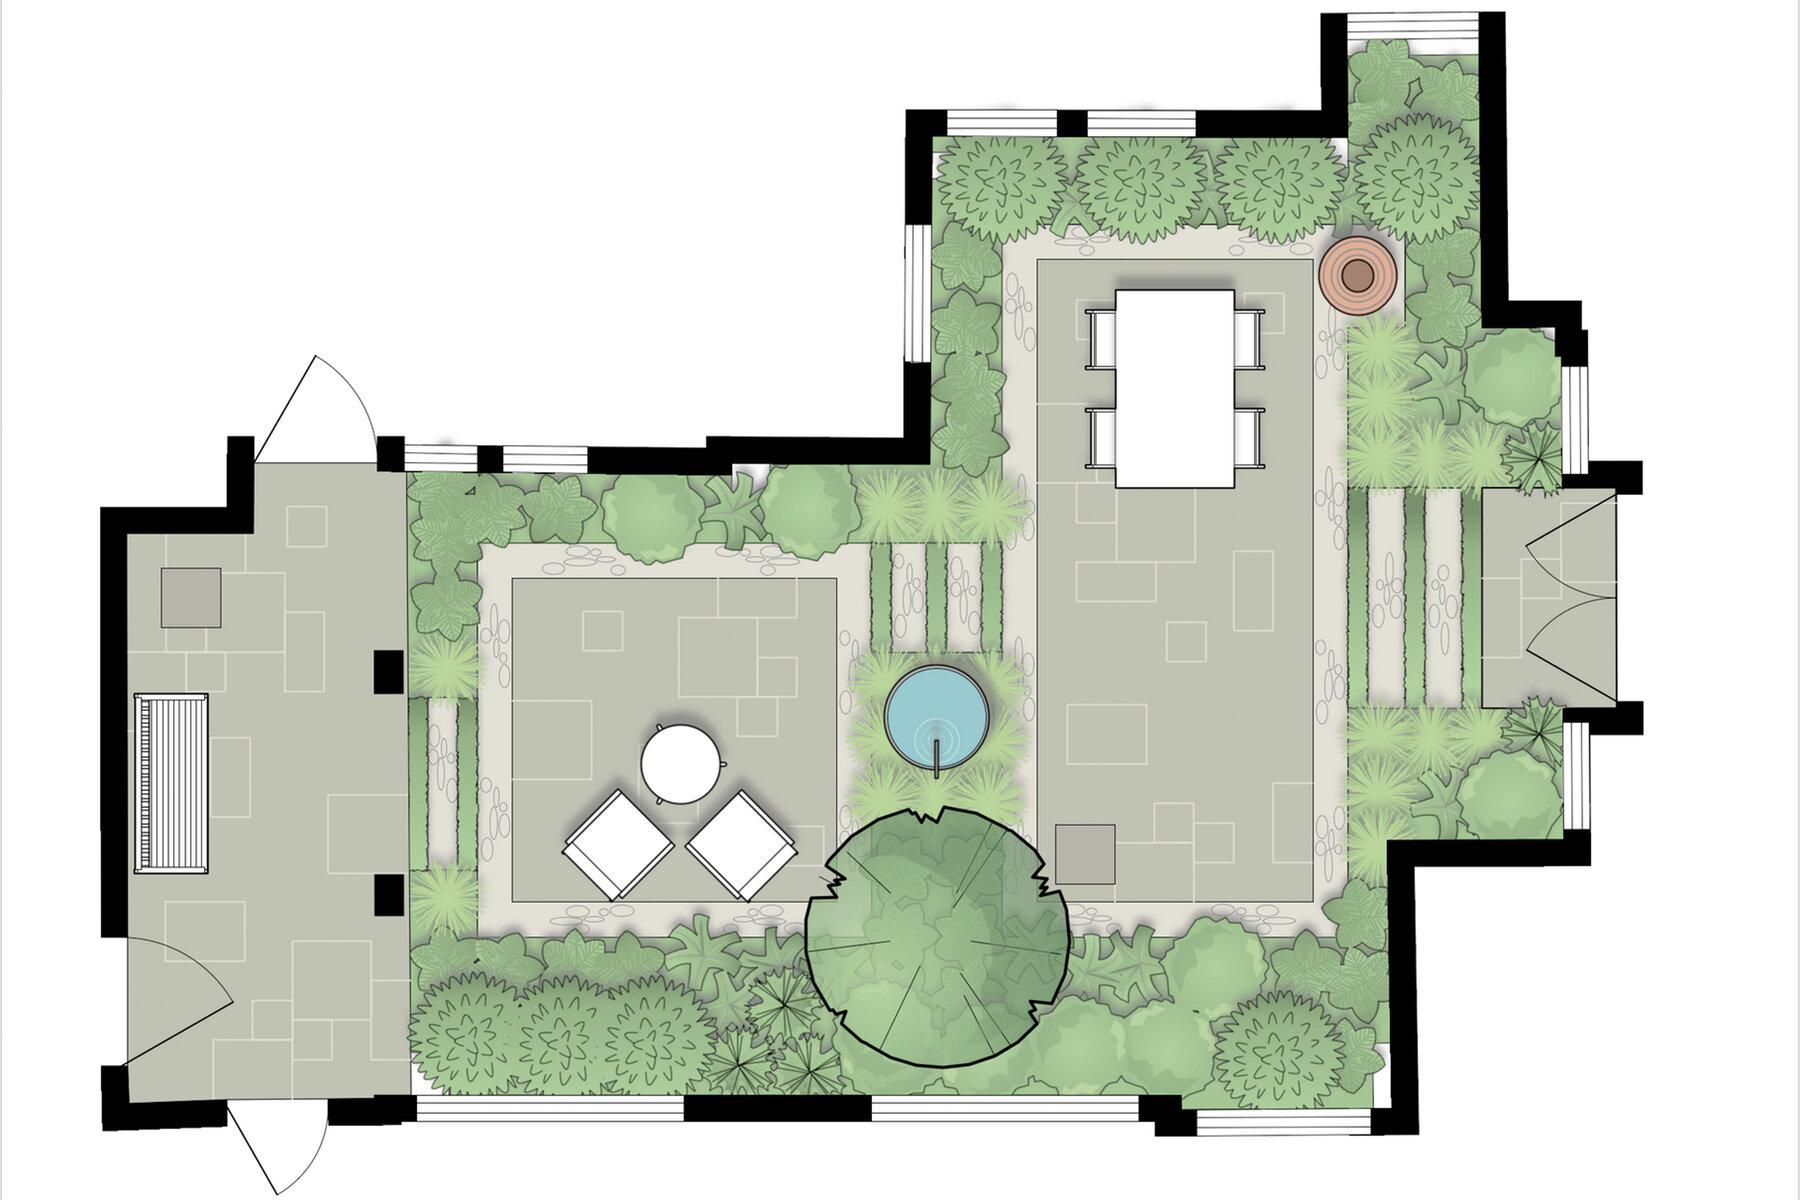 Sketch plan courtyard garden designer plumpton.jpg